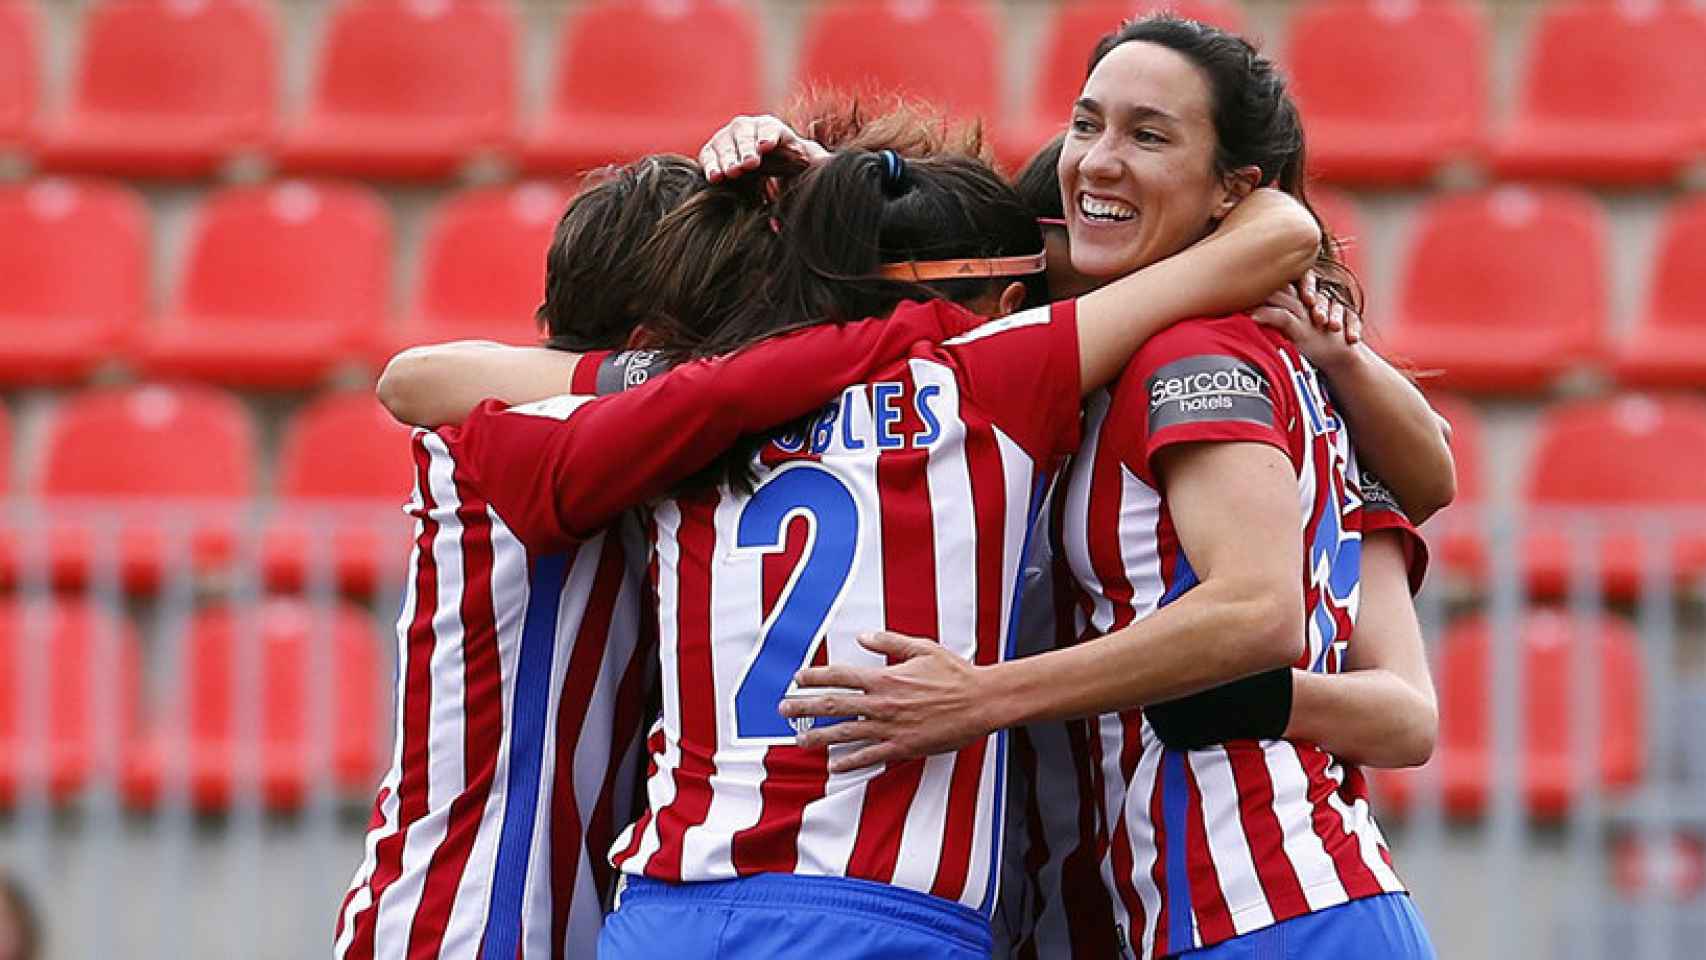 El Atlético de Madrid golea en casa al Zaragoza Femenino. Foto: Twitter (@AtletiFemenino)